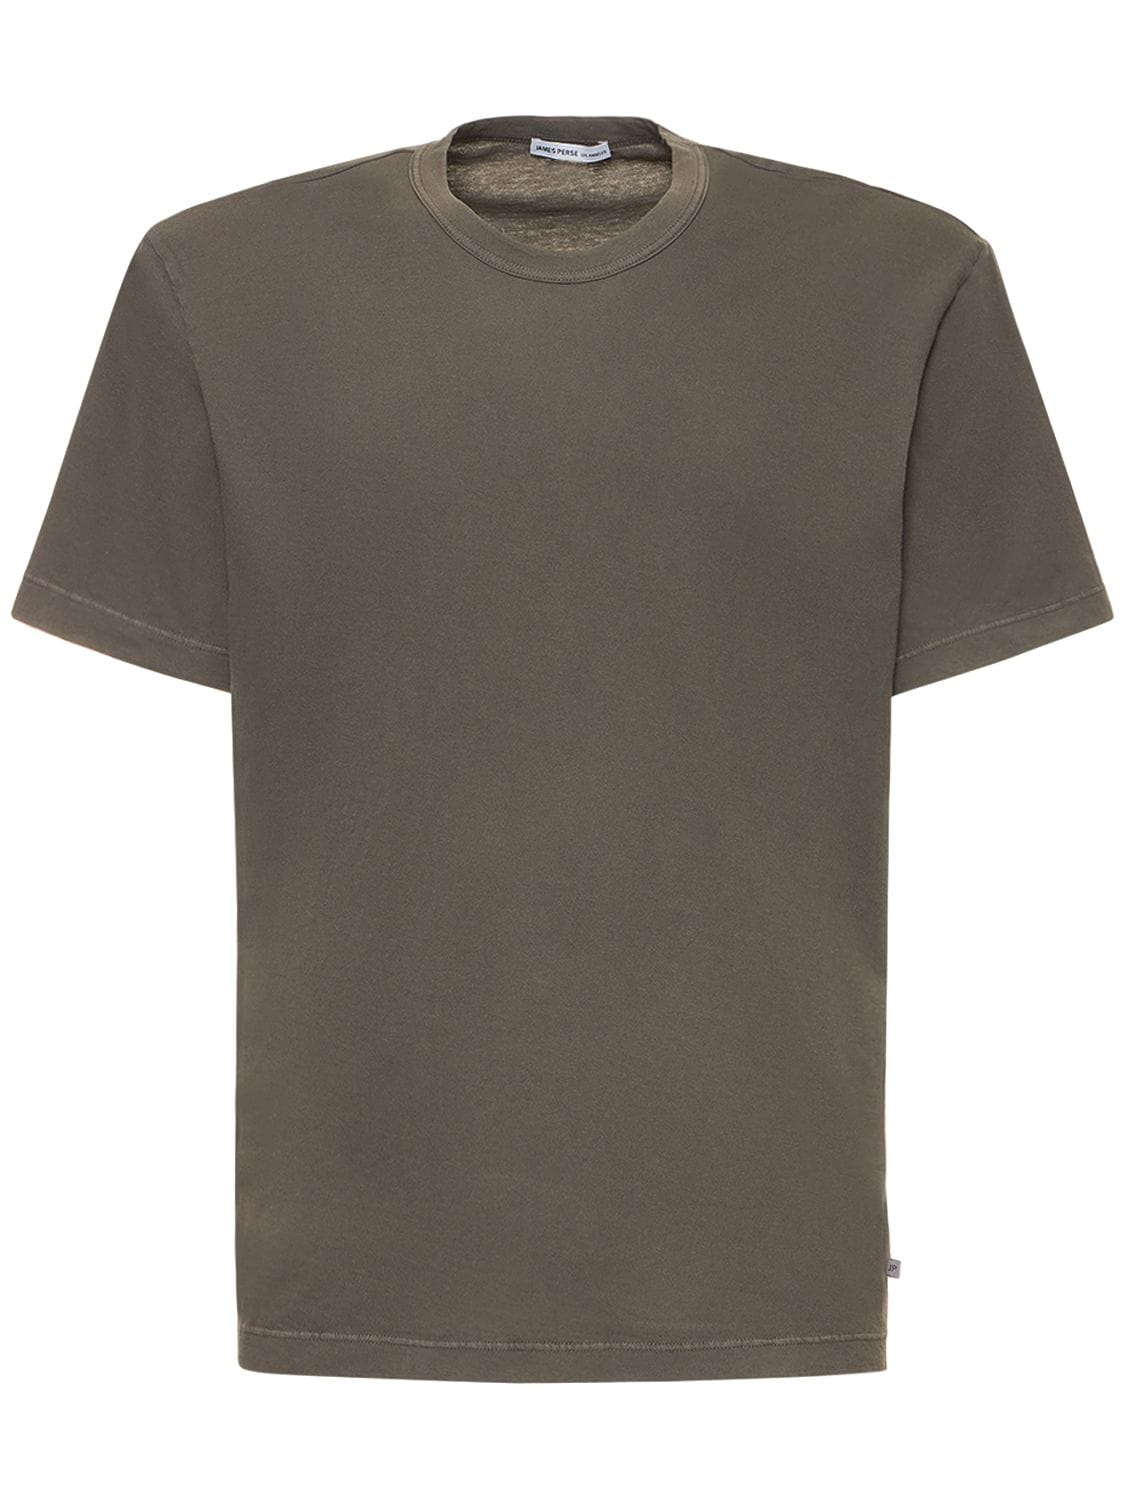 James Perse Lightweight Cotton Jersey T-shirt In River Rock